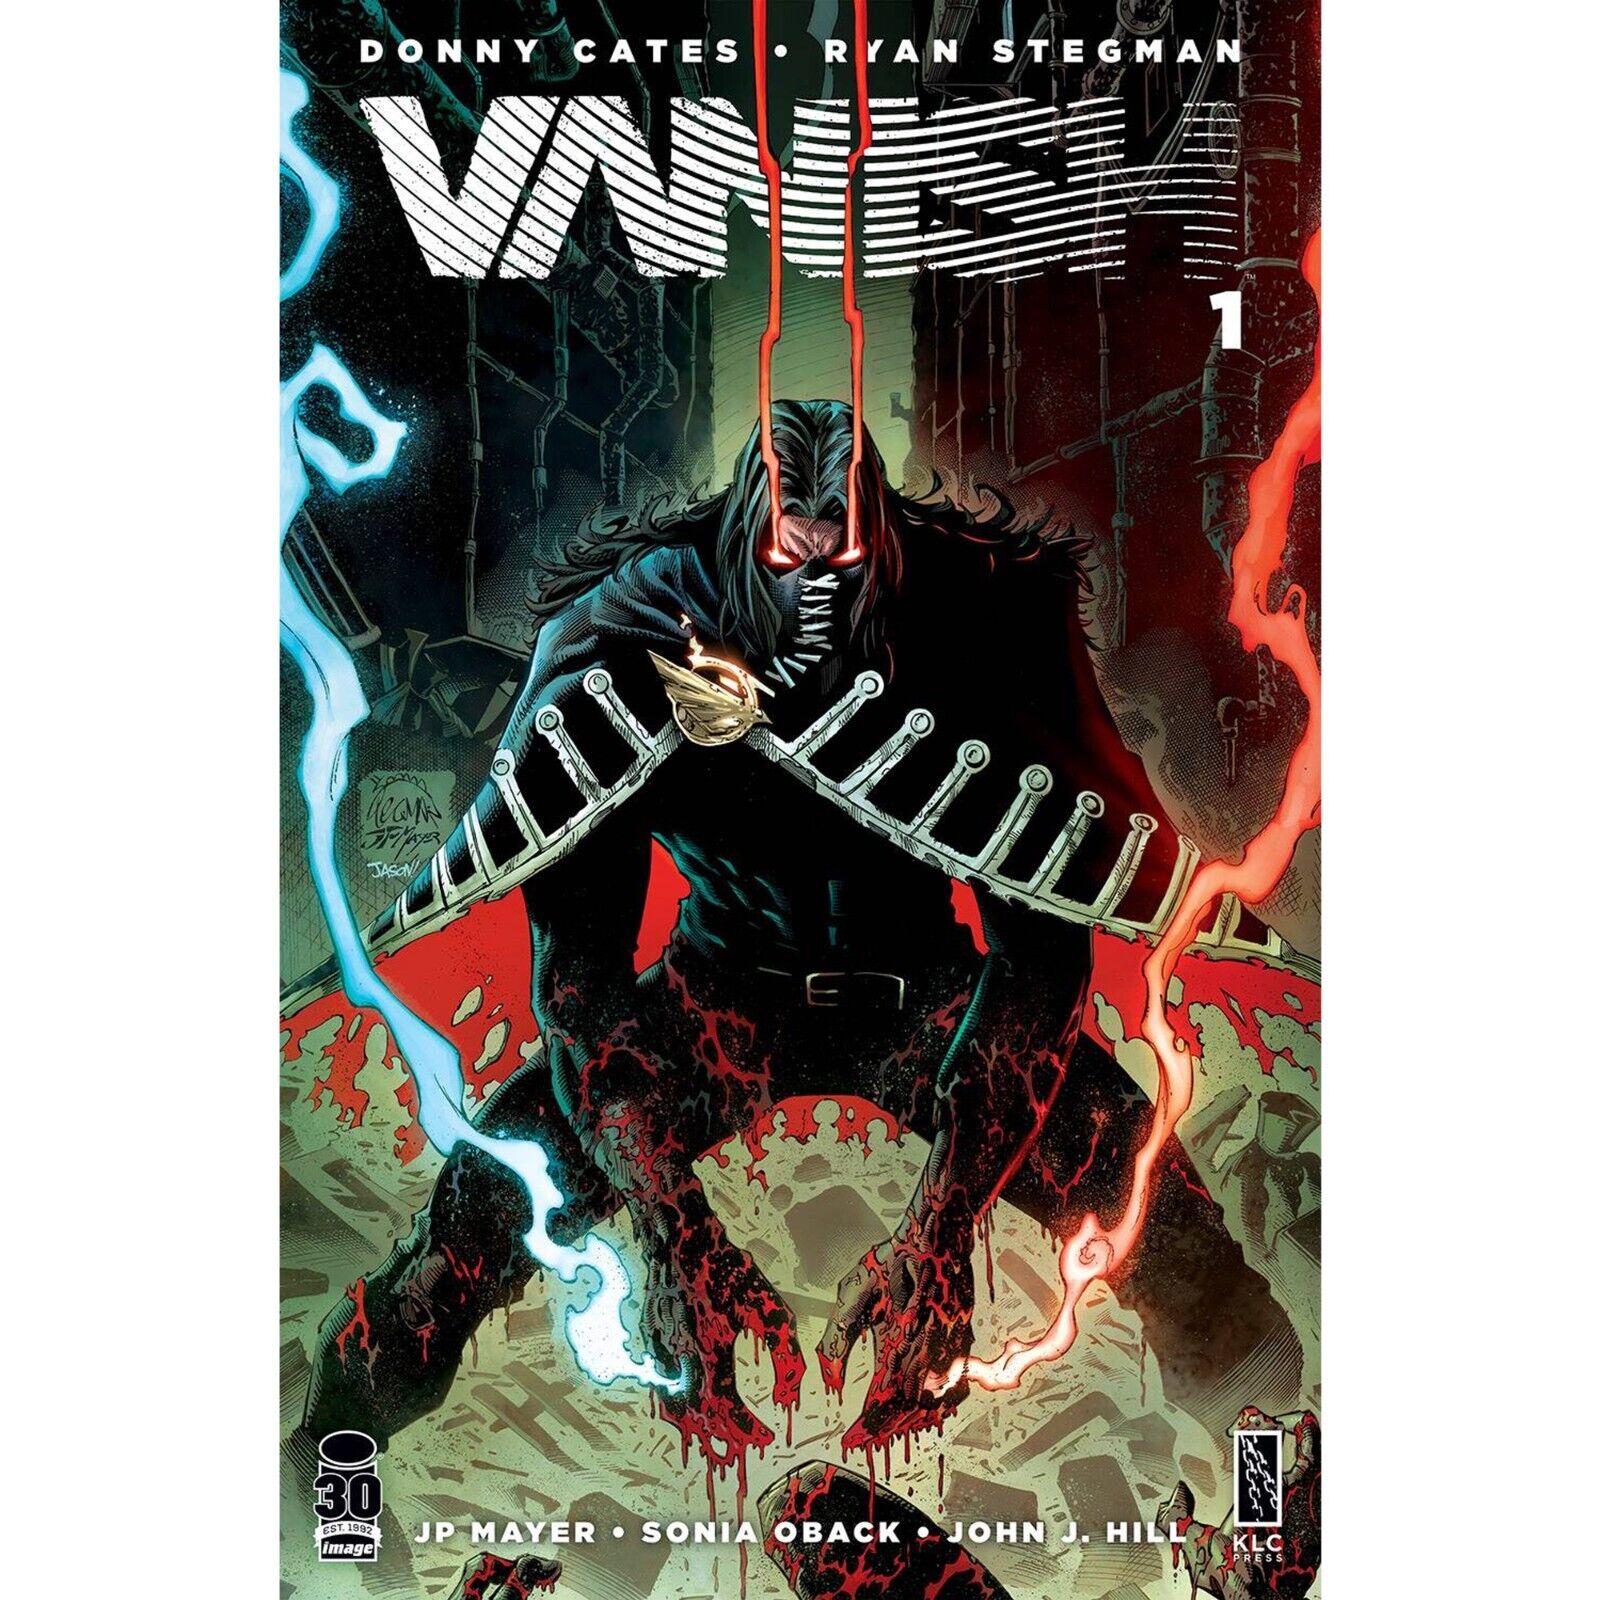 Vanish (2022) 1 2 3 Variants | Image Comics - Cates Stegman | COVER SELECT